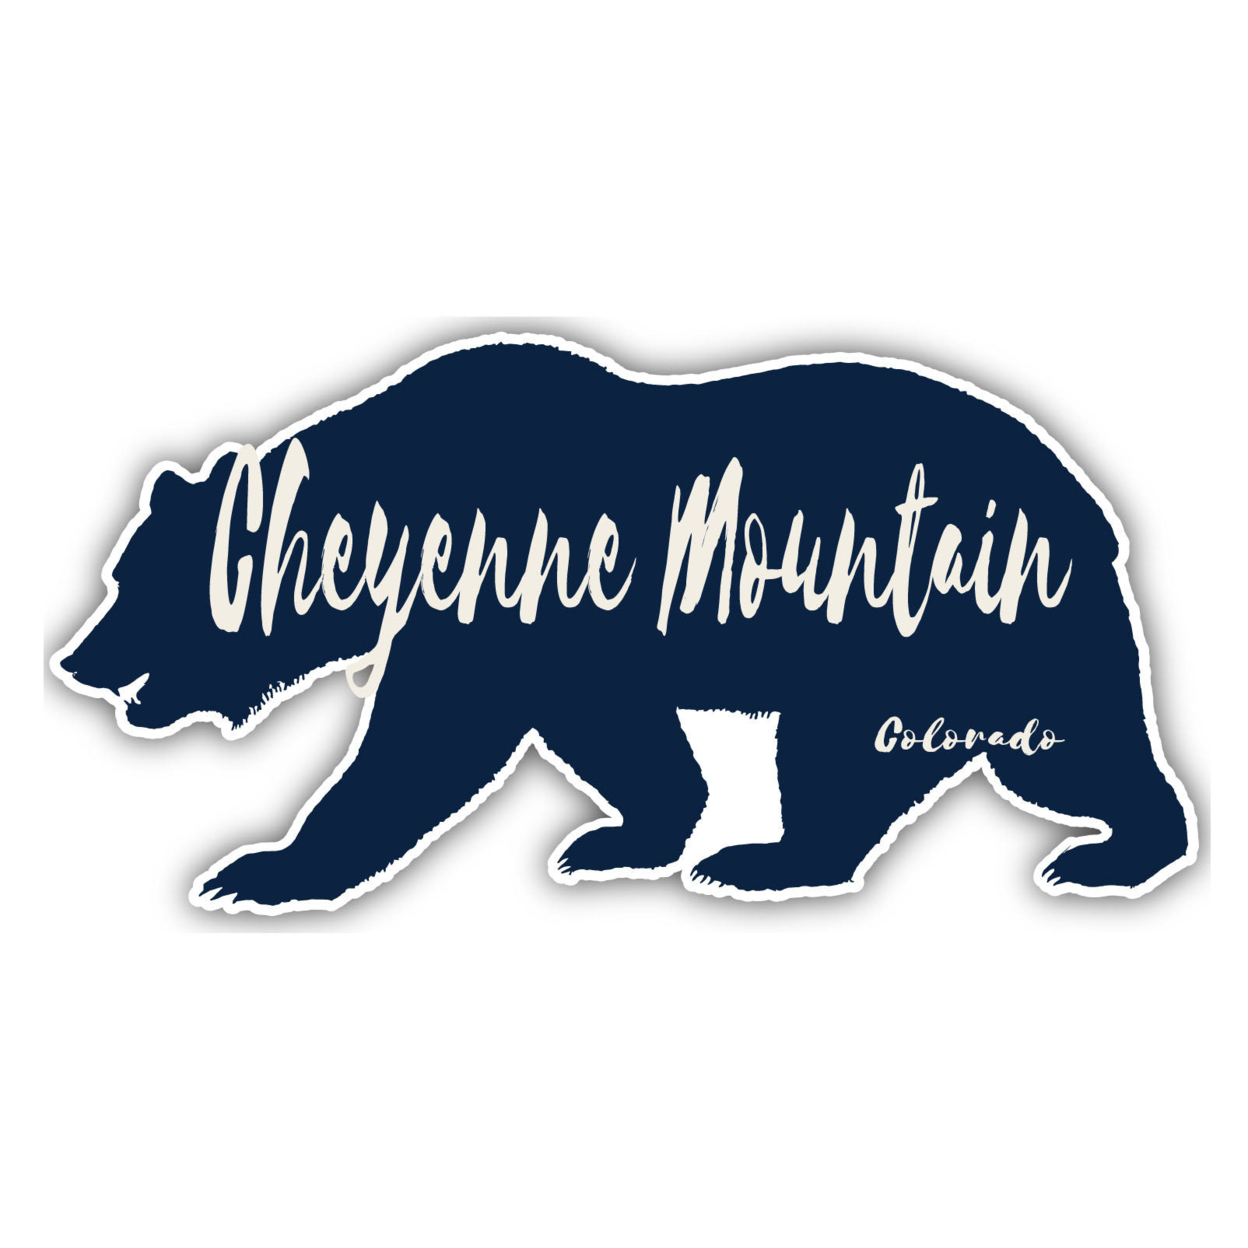 Cheyenne Mountain Colorado Souvenir Decorative Stickers (Choose Theme And Size) - 4-Pack, 10-Inch, Bear